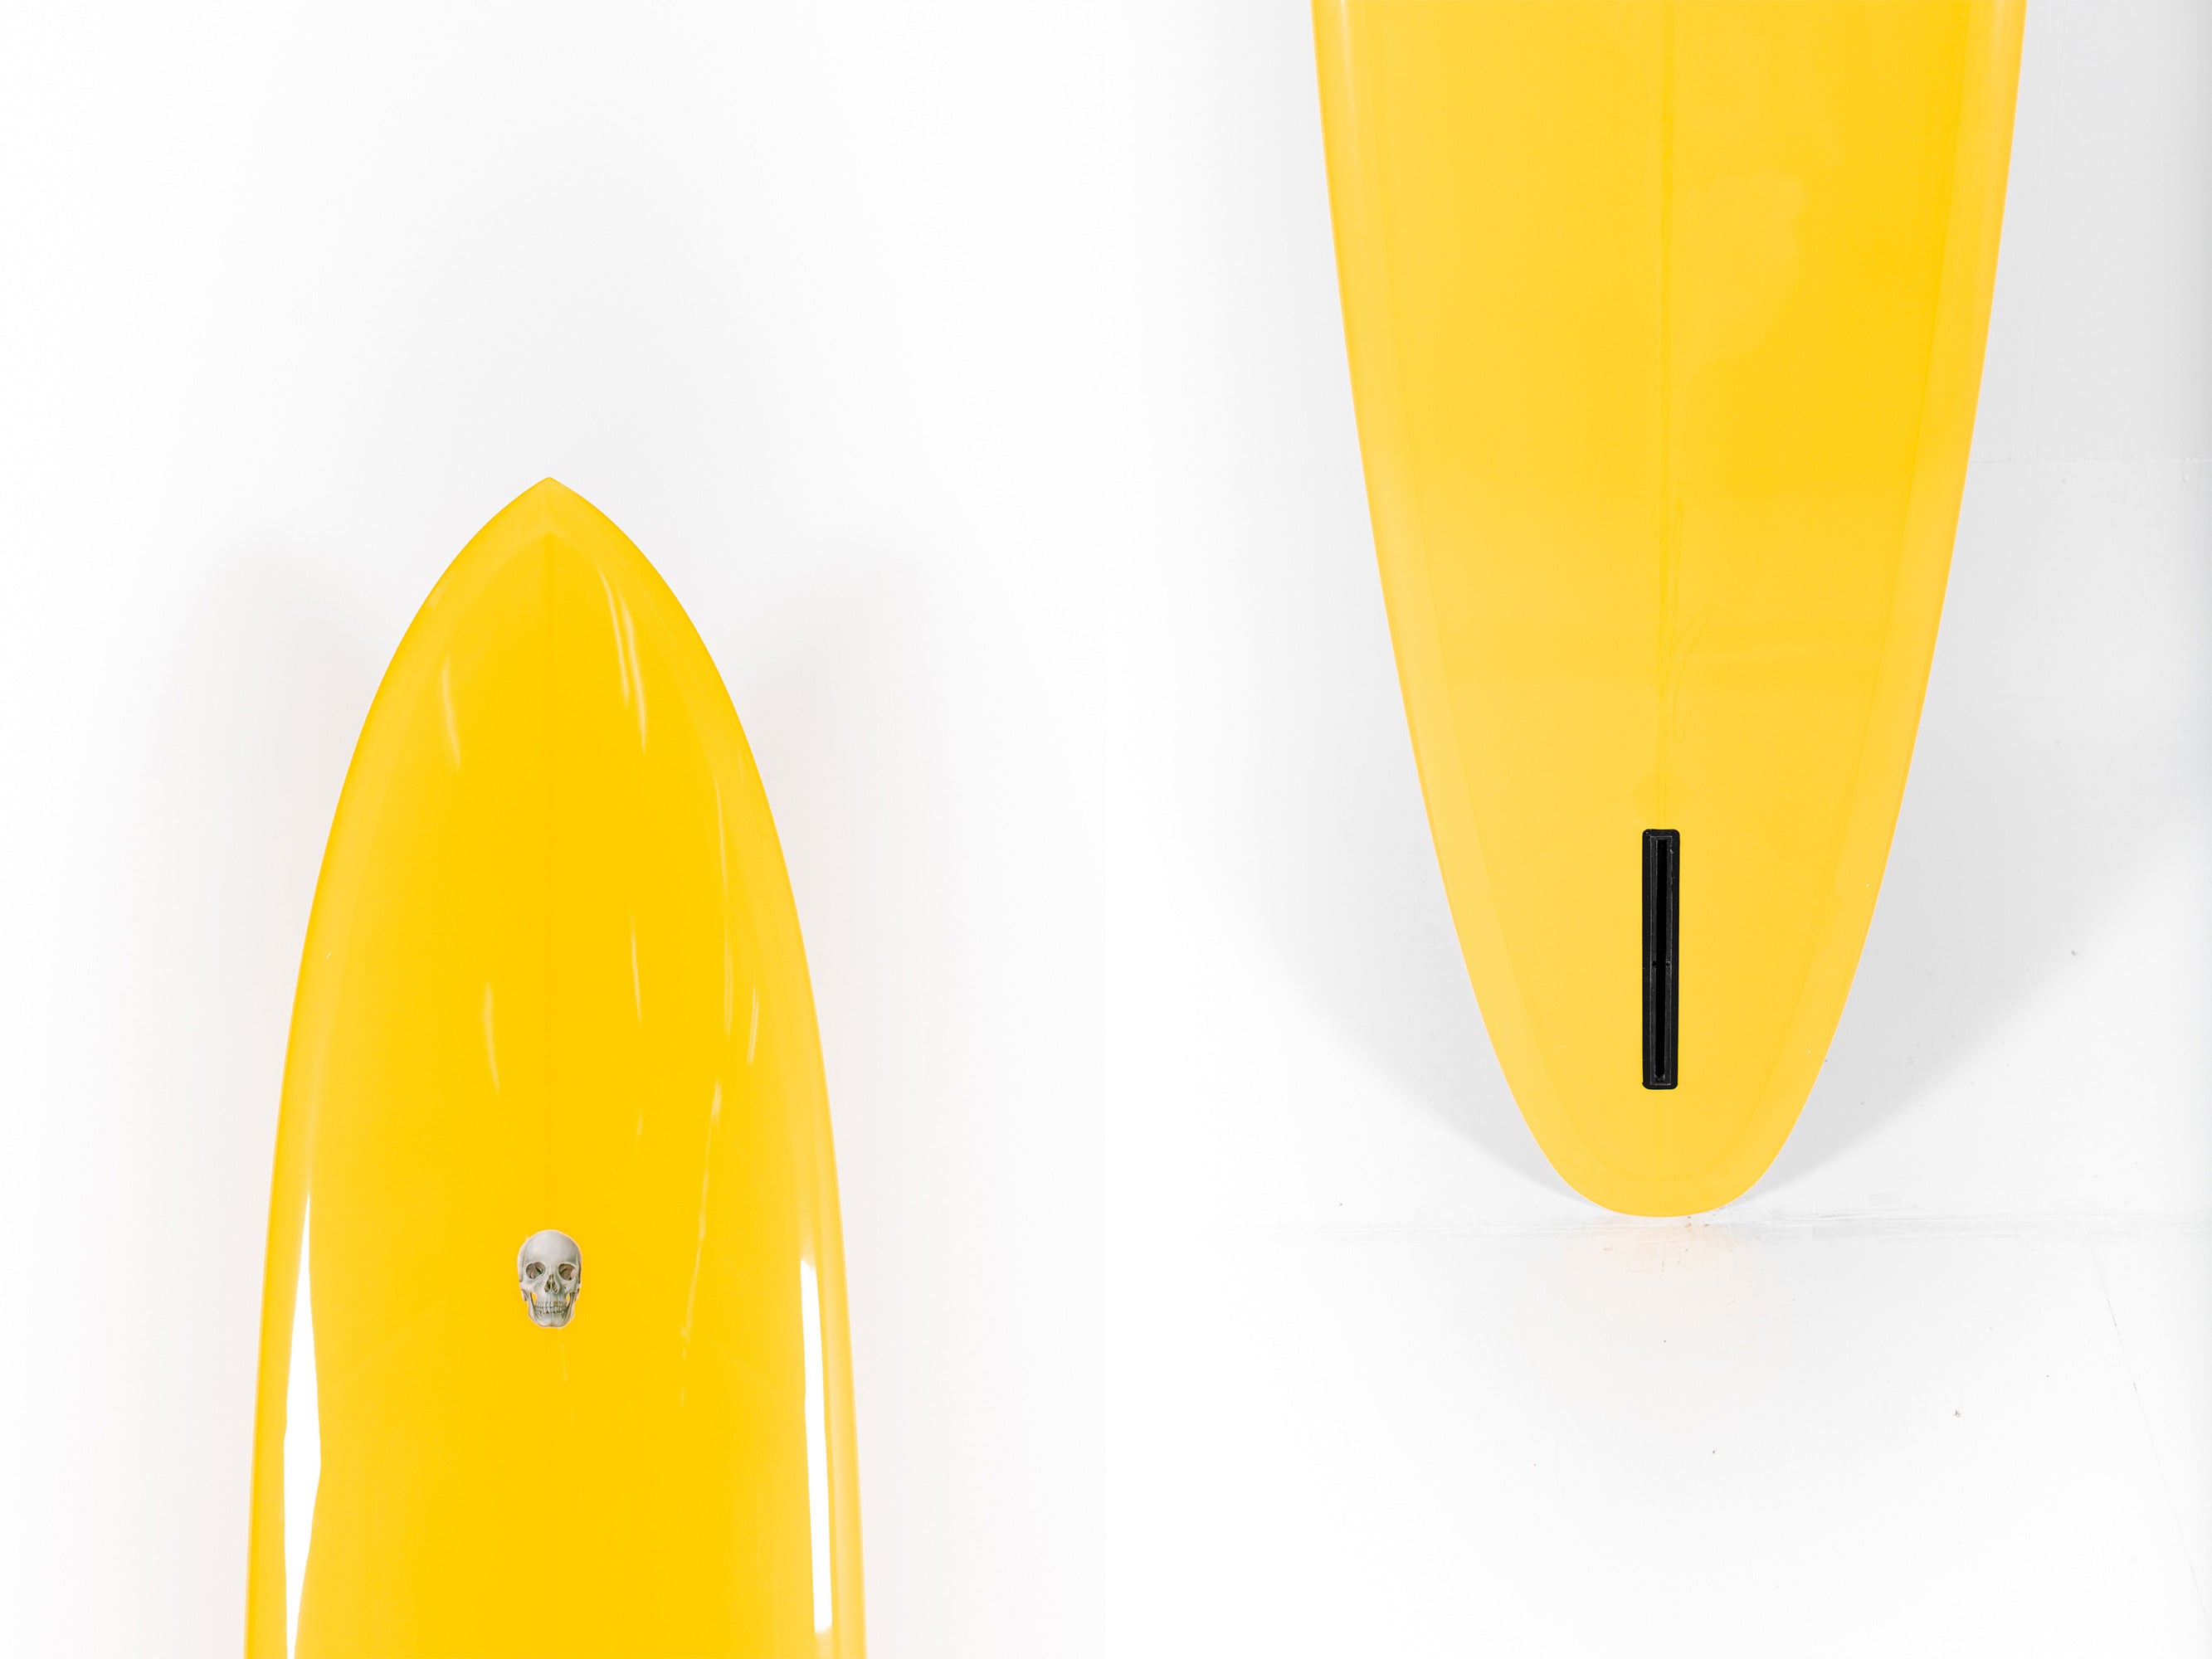 Christenson Surfboards - FLAT TRACKER 2.0 - 7'6" x 21 1/4 x 2 7/8 - CX03147